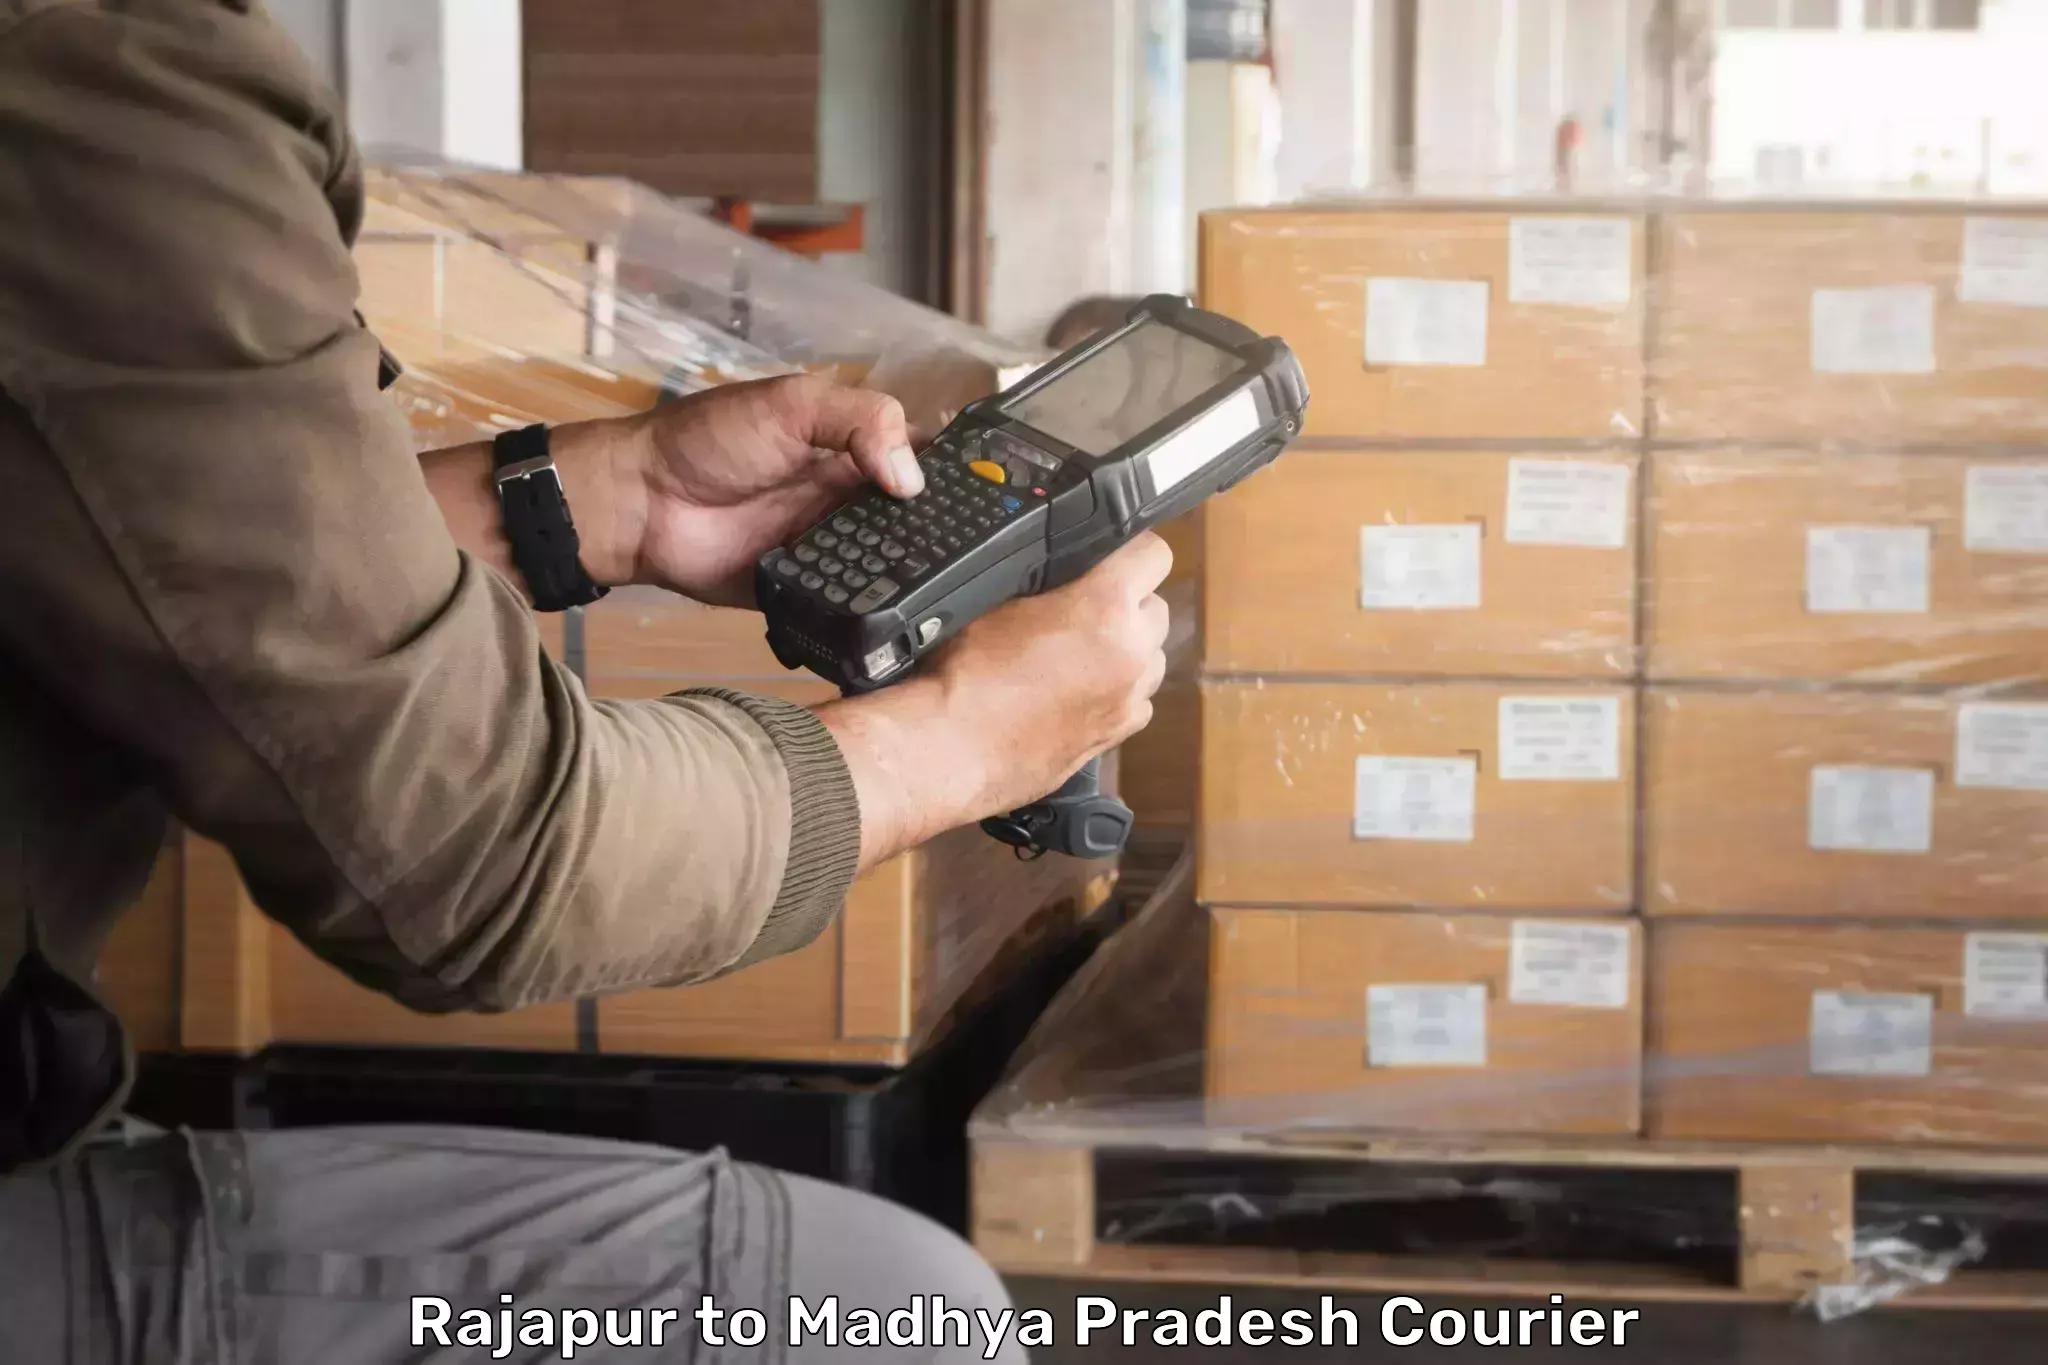 Global courier networks Rajapur to Morar